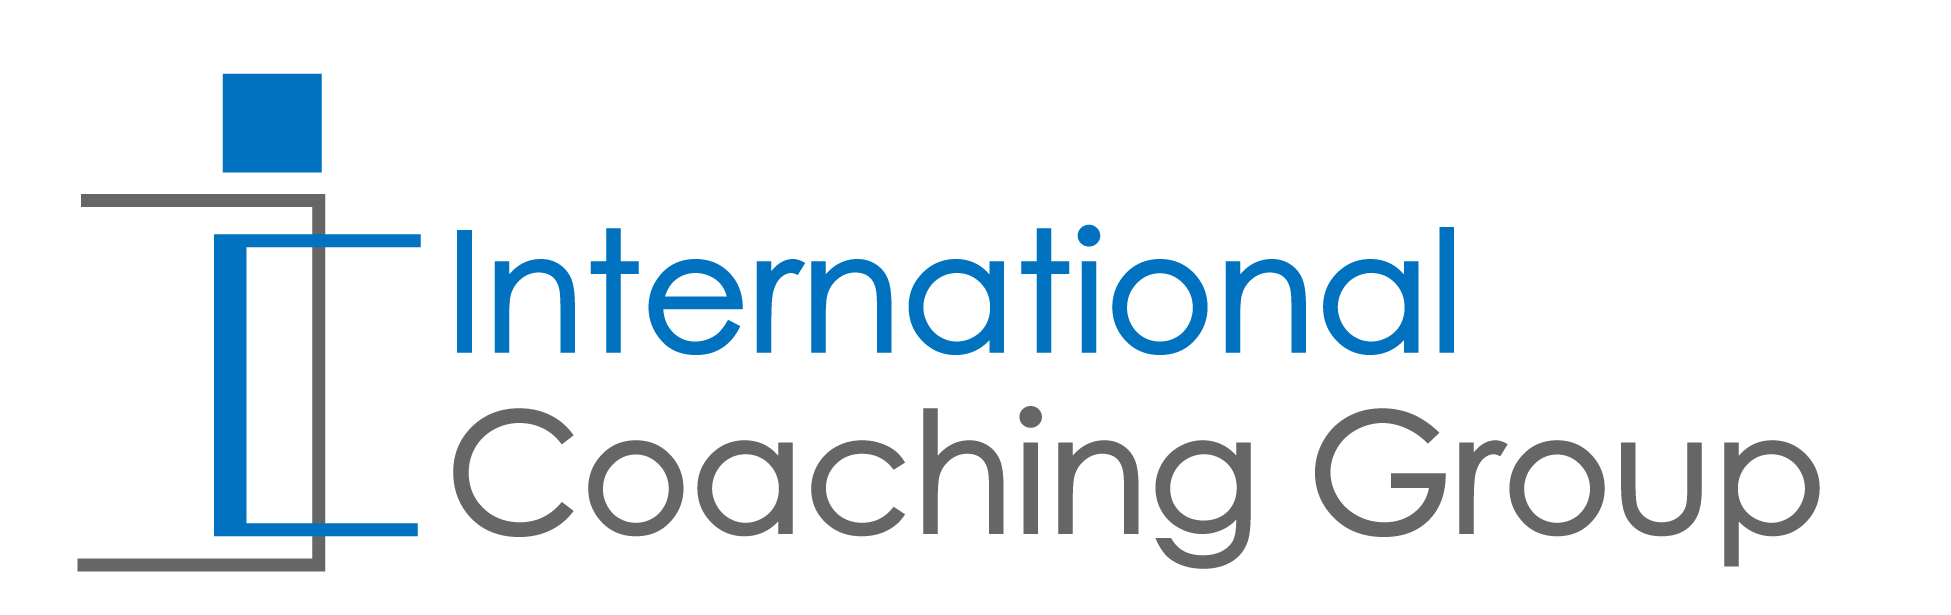 Global Comnunity of coaching